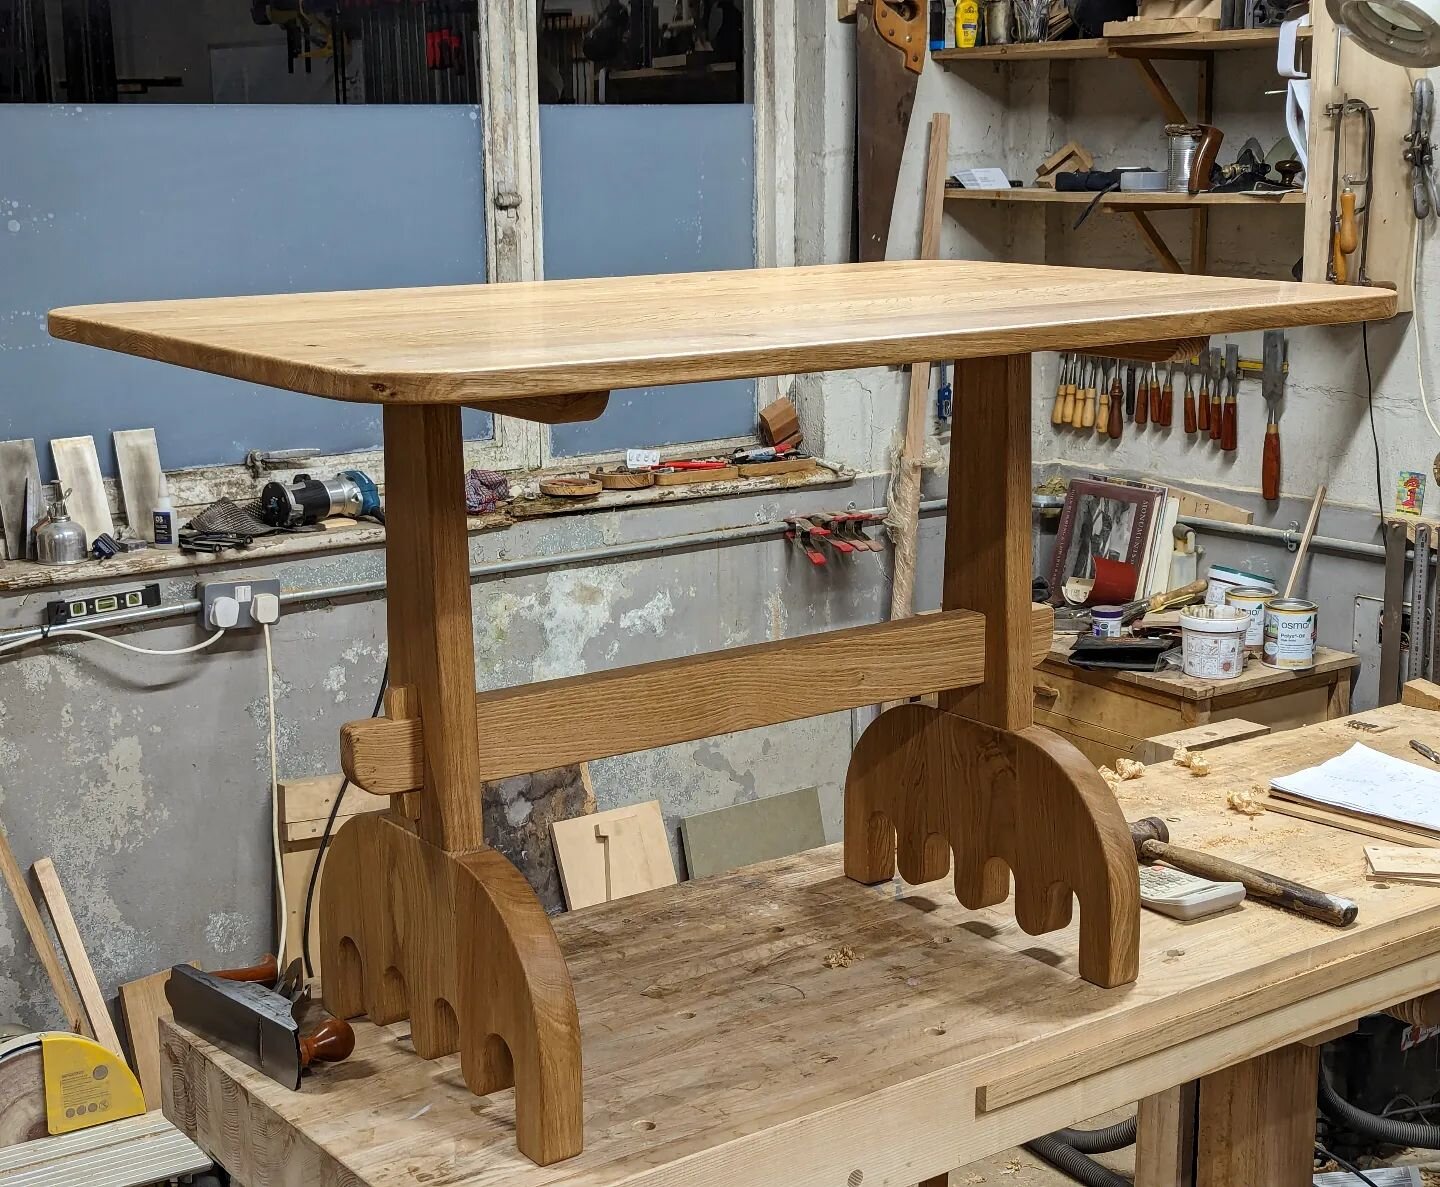 This custom size table is on the way to LA.  So fun to make and that oak looks banging.
#biginusa #oak #craft #sweetfurni